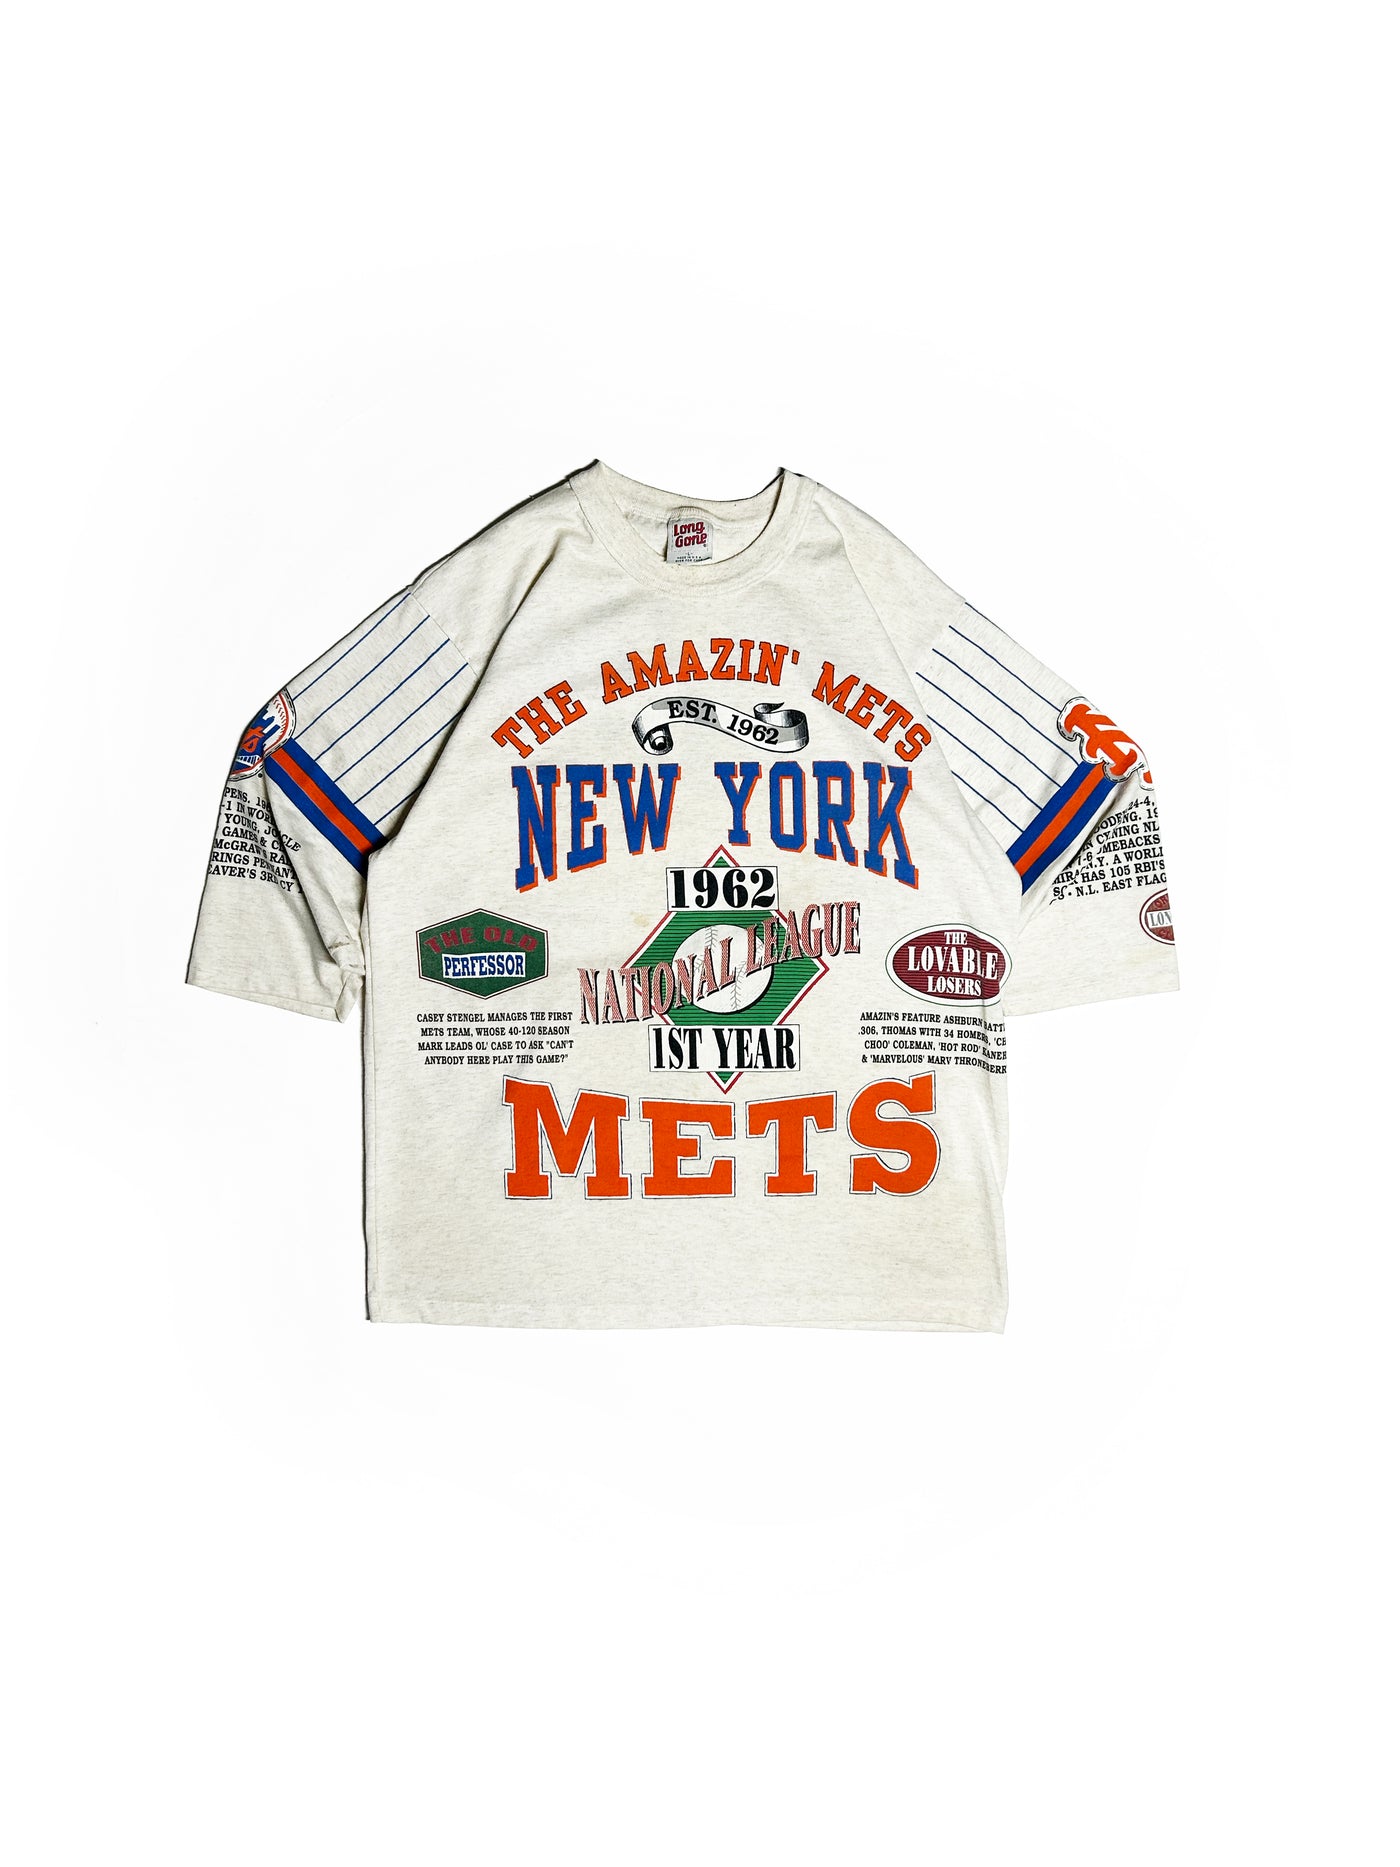 Vintage 90s The Amazin’ Mets Long Gone Shirt